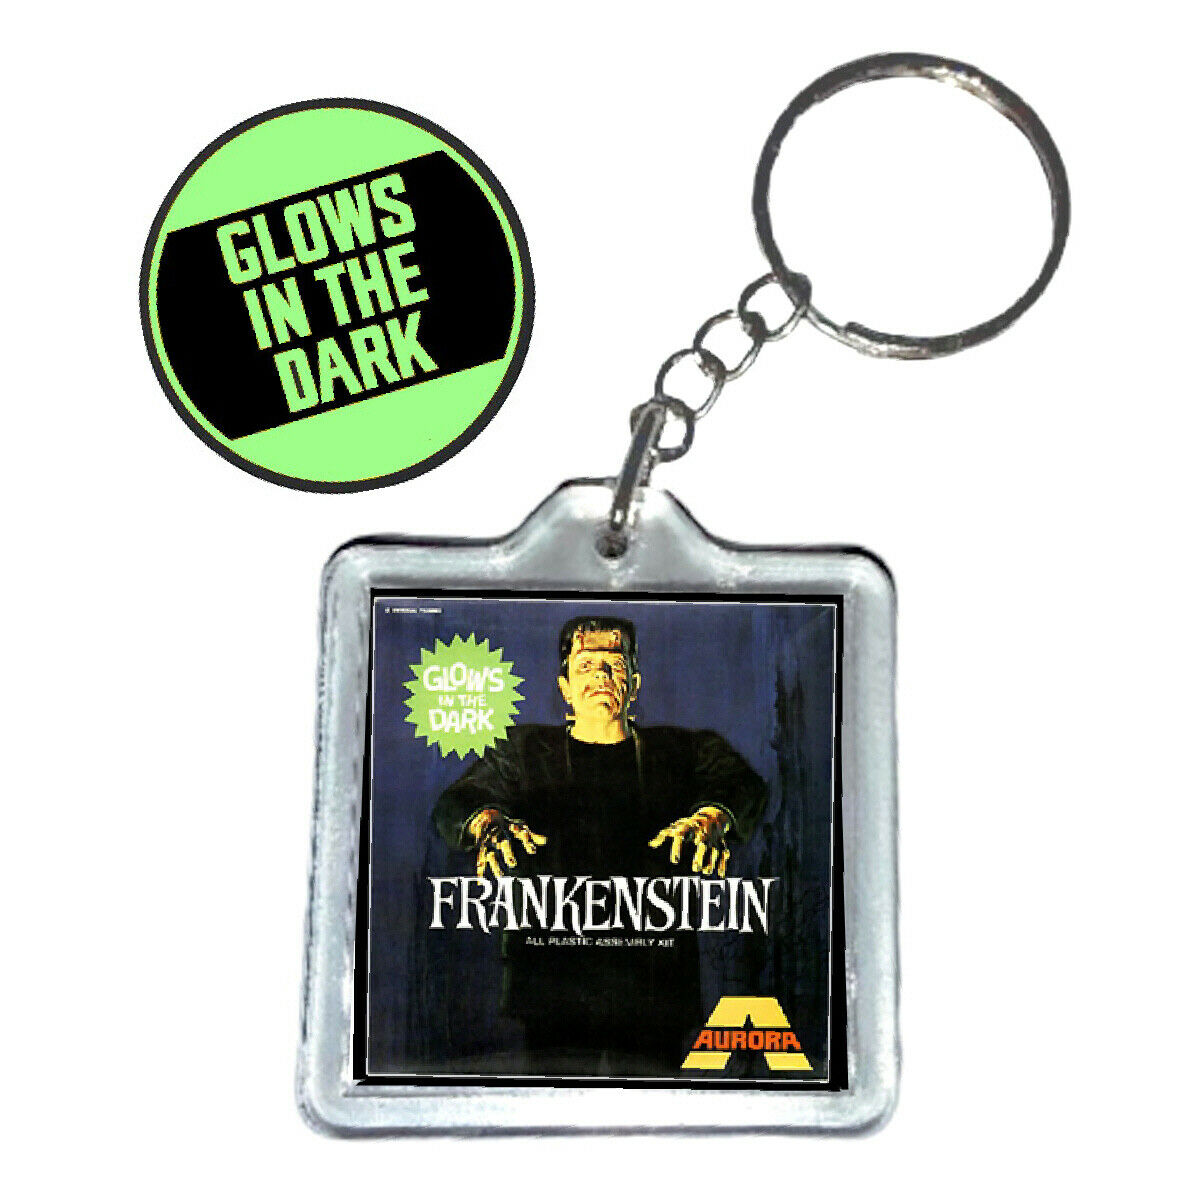 Frankenstein Aurora Monsters Model Kit Glow in the dark Key chain keyring